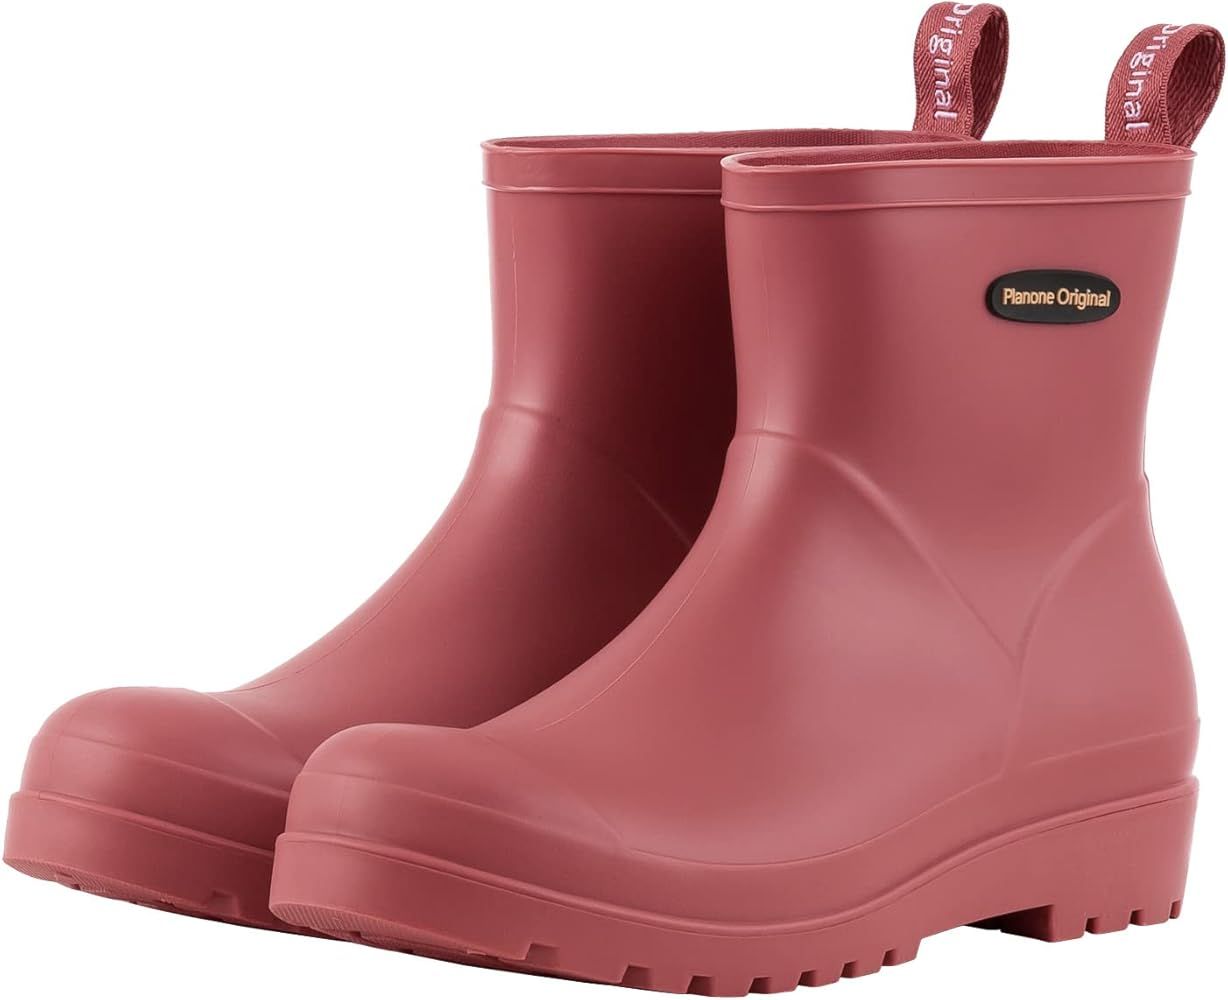 planone Short rain Boots for Women Waterproof Garden Shoes Anti-Slipping Rainboots for Ladies Comfor | Amazon (US)